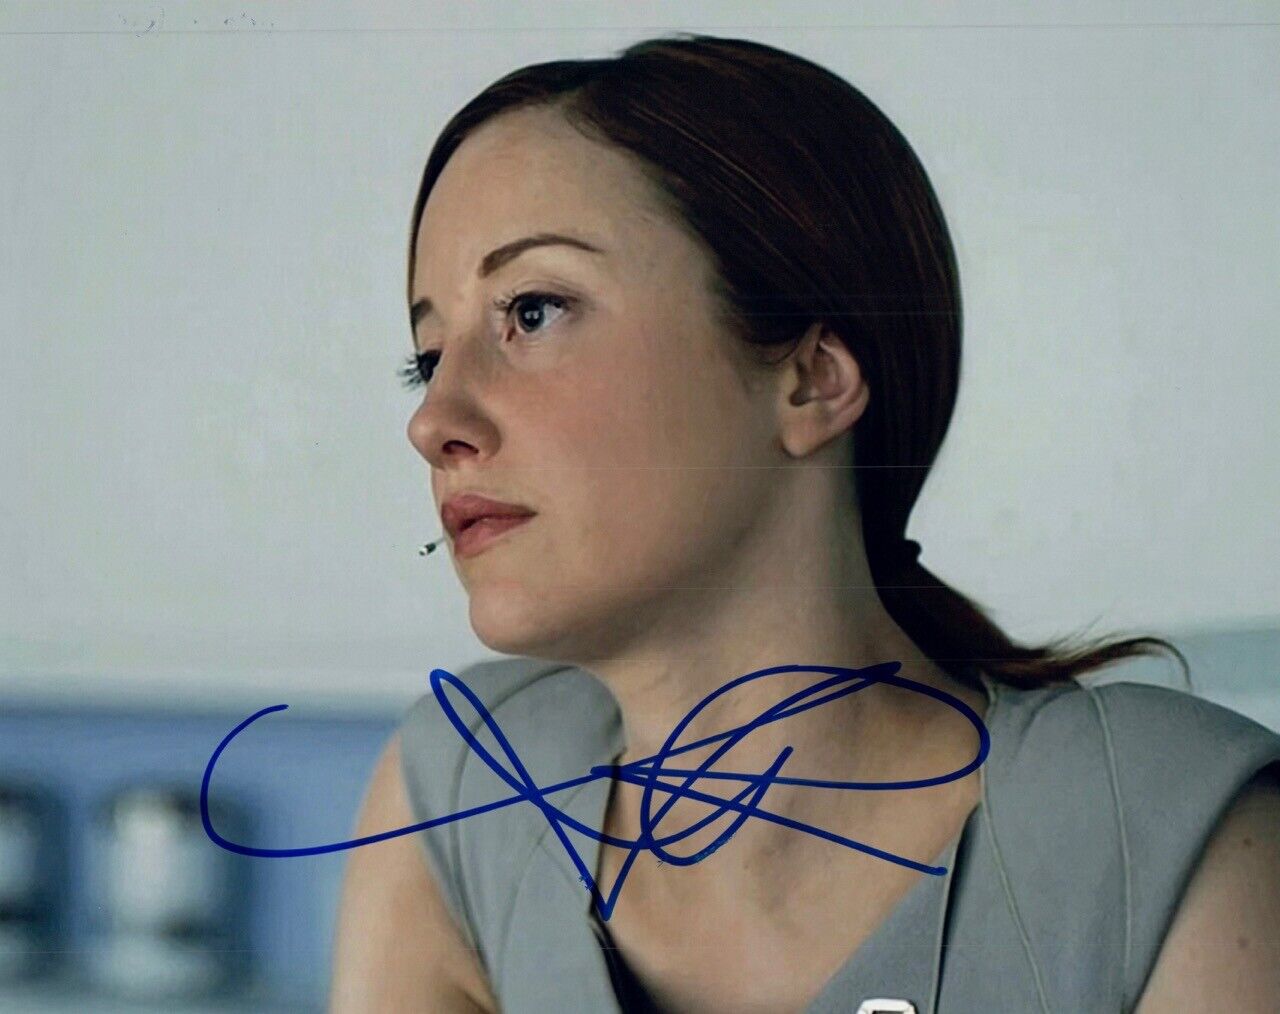 Andrea Riseborough Signed Autographed 8x10 Photo Poster painting BIRDMAN OBLIVION Actress COA